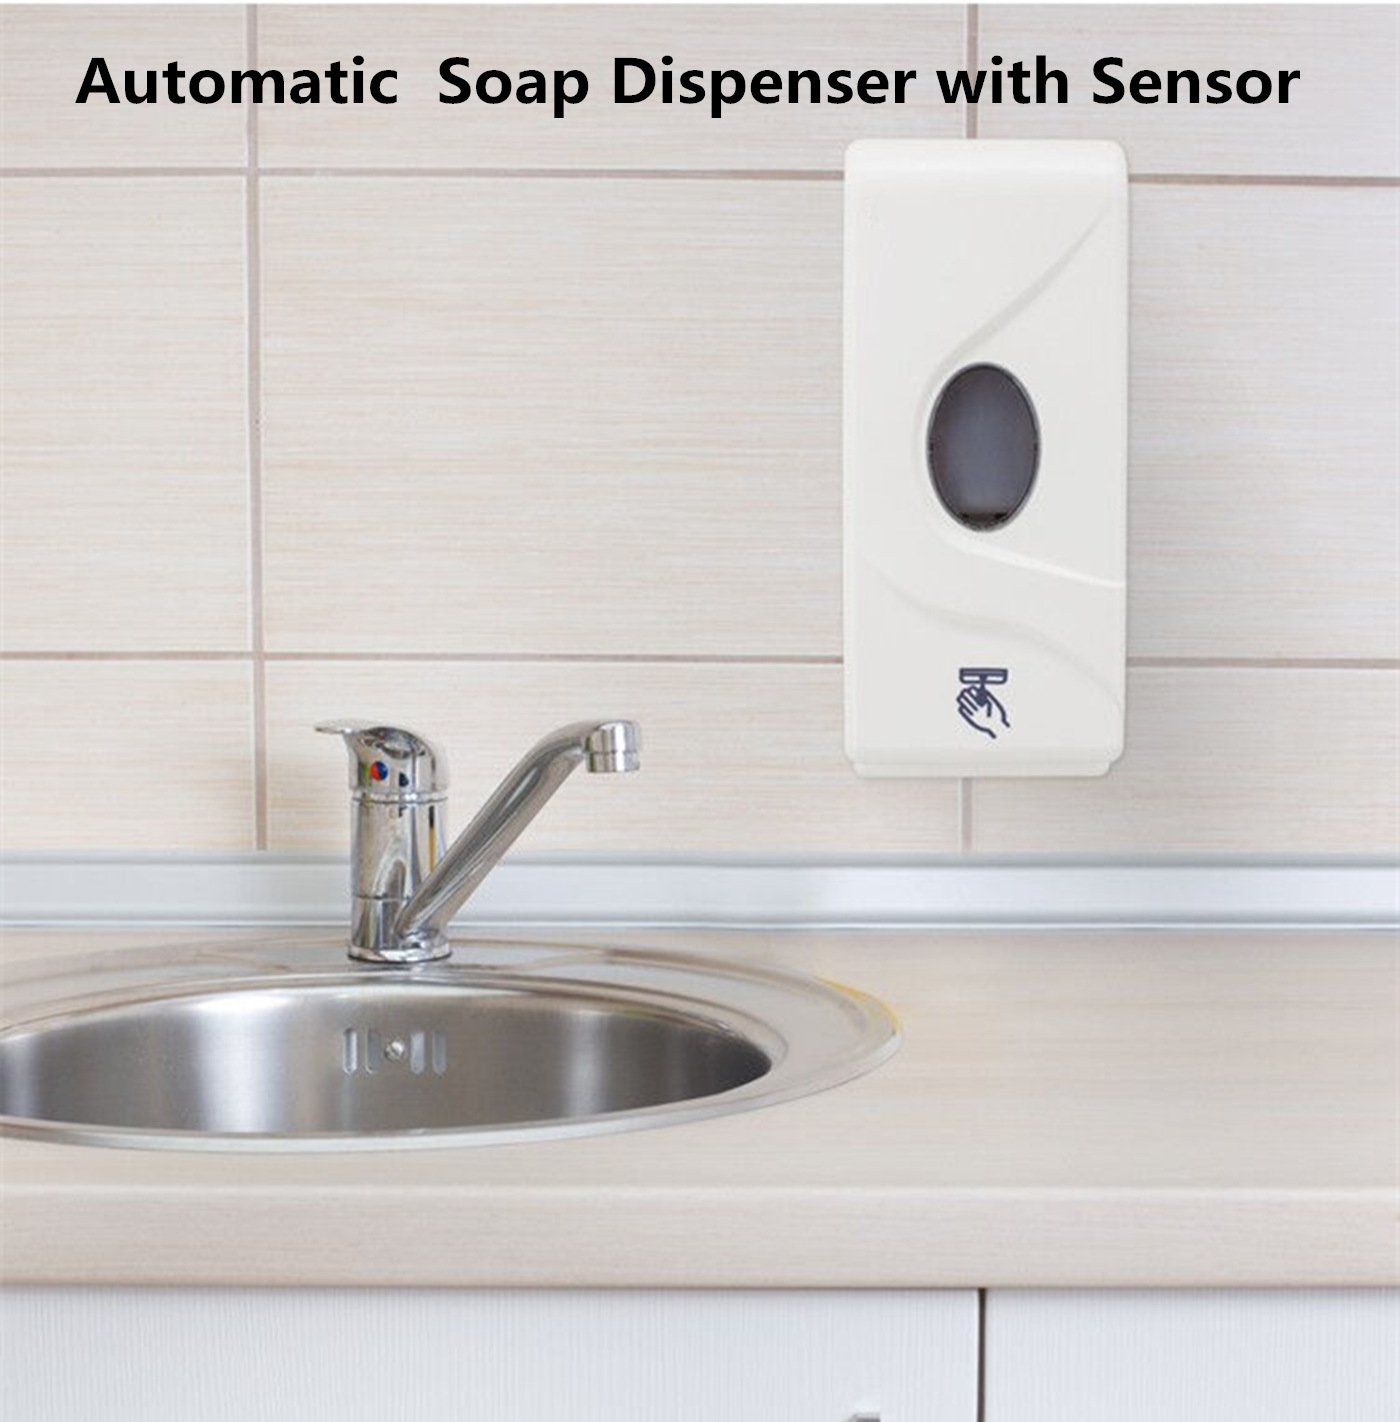 Automatic Soap Dispenser with Sensor.jpg